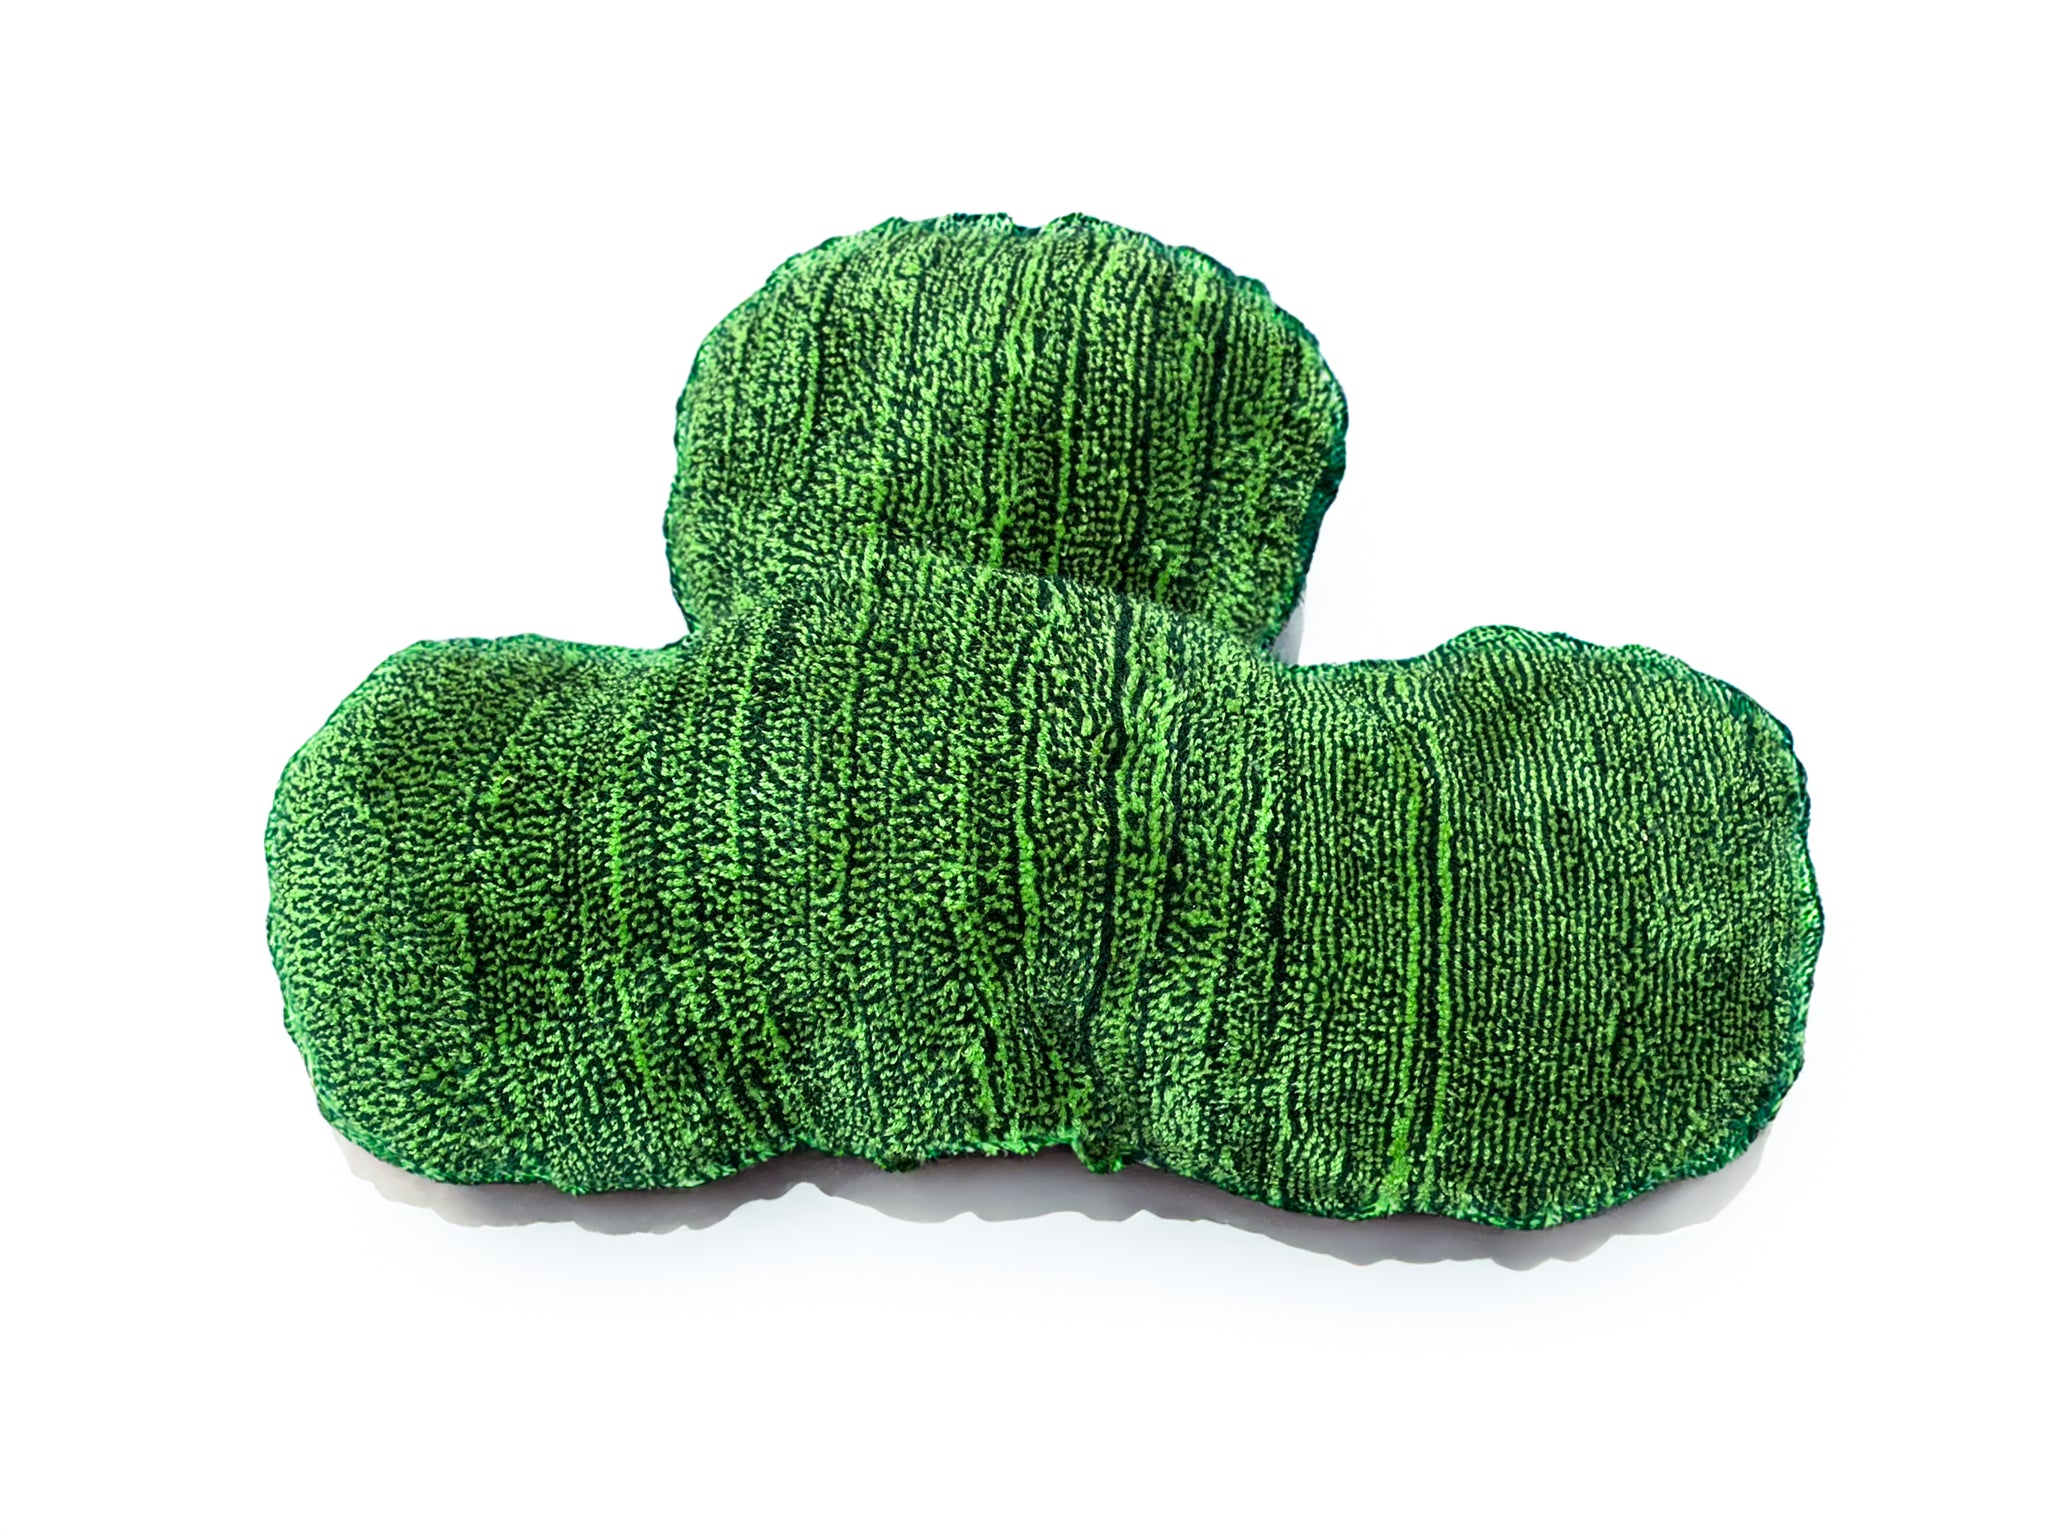 Soft sculpture of a green leaf 